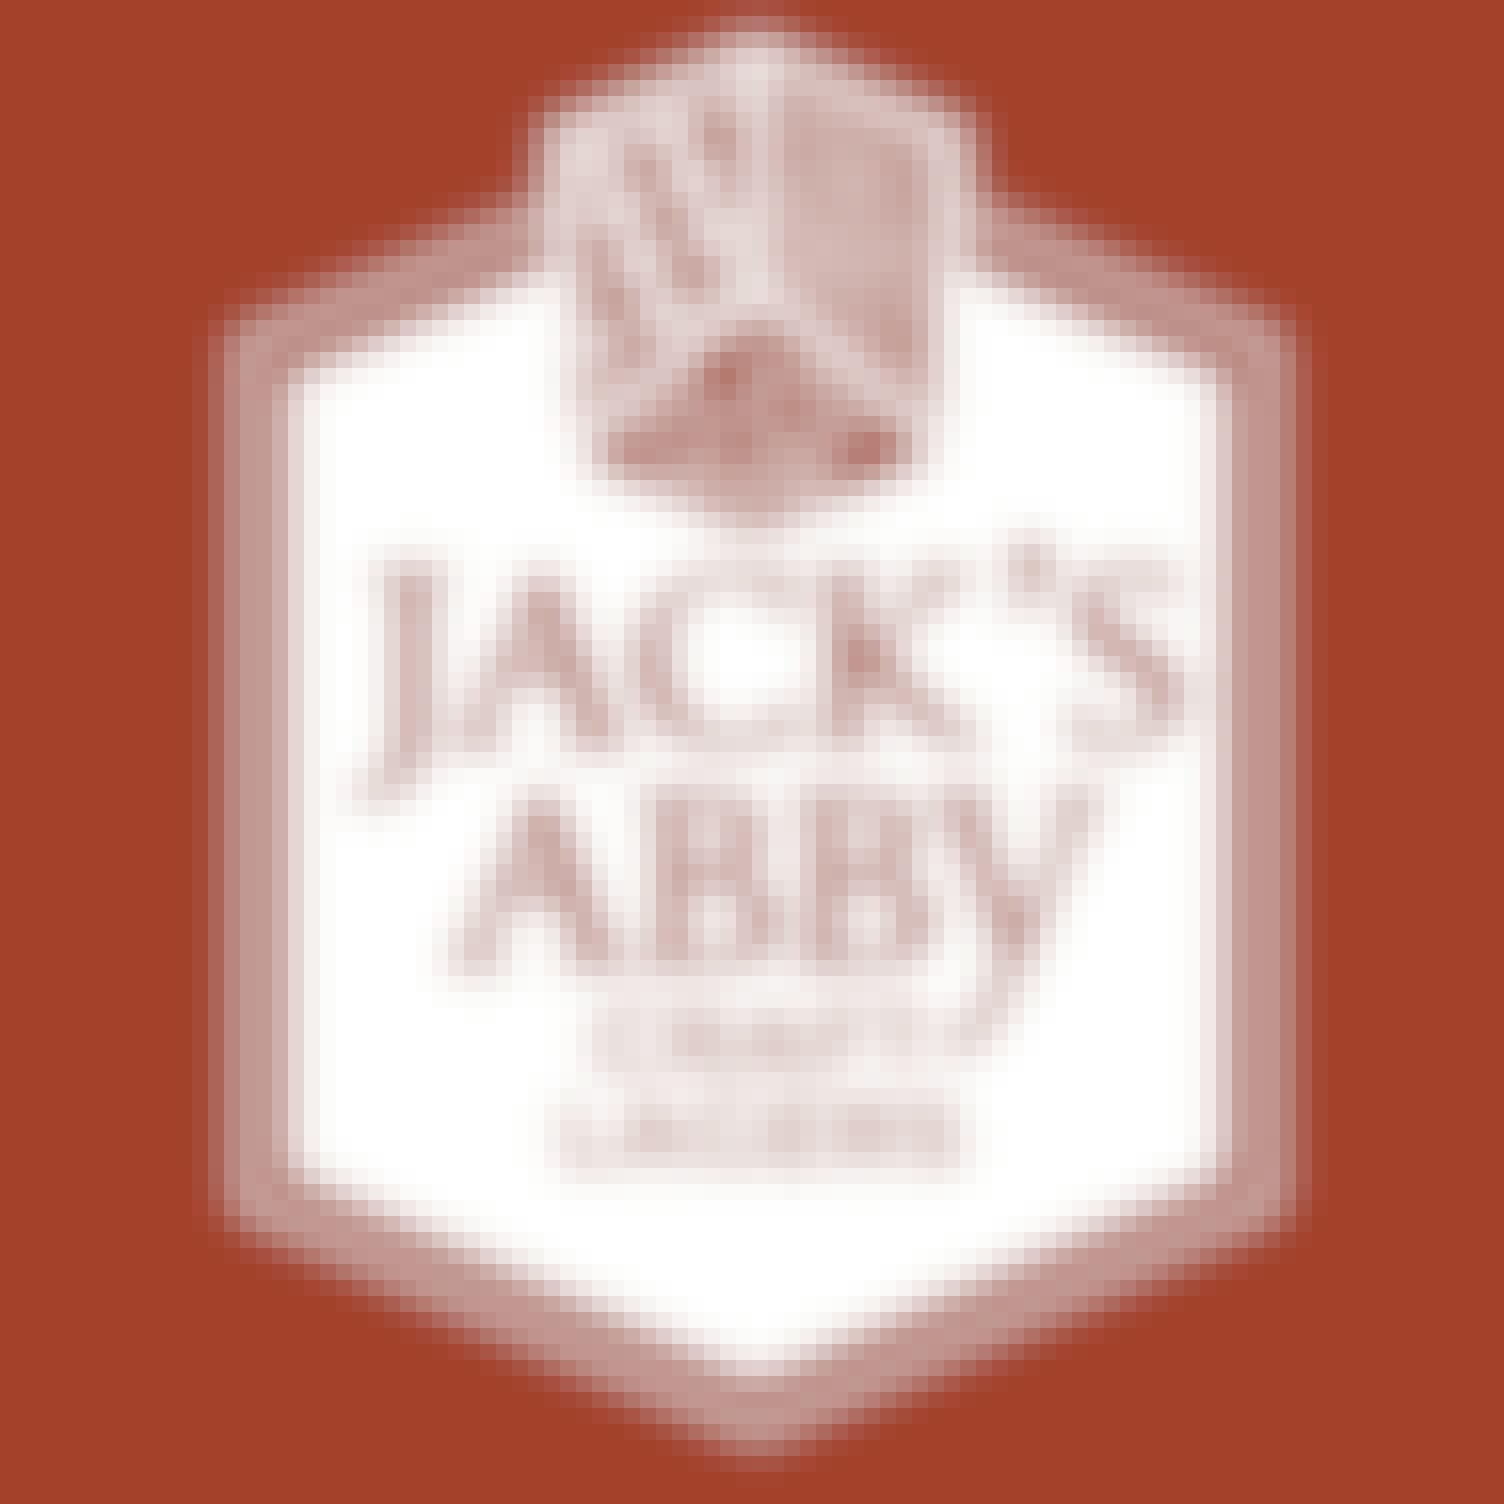 Jack's Abby Sunny Ridge 4 pack 16 oz. Can